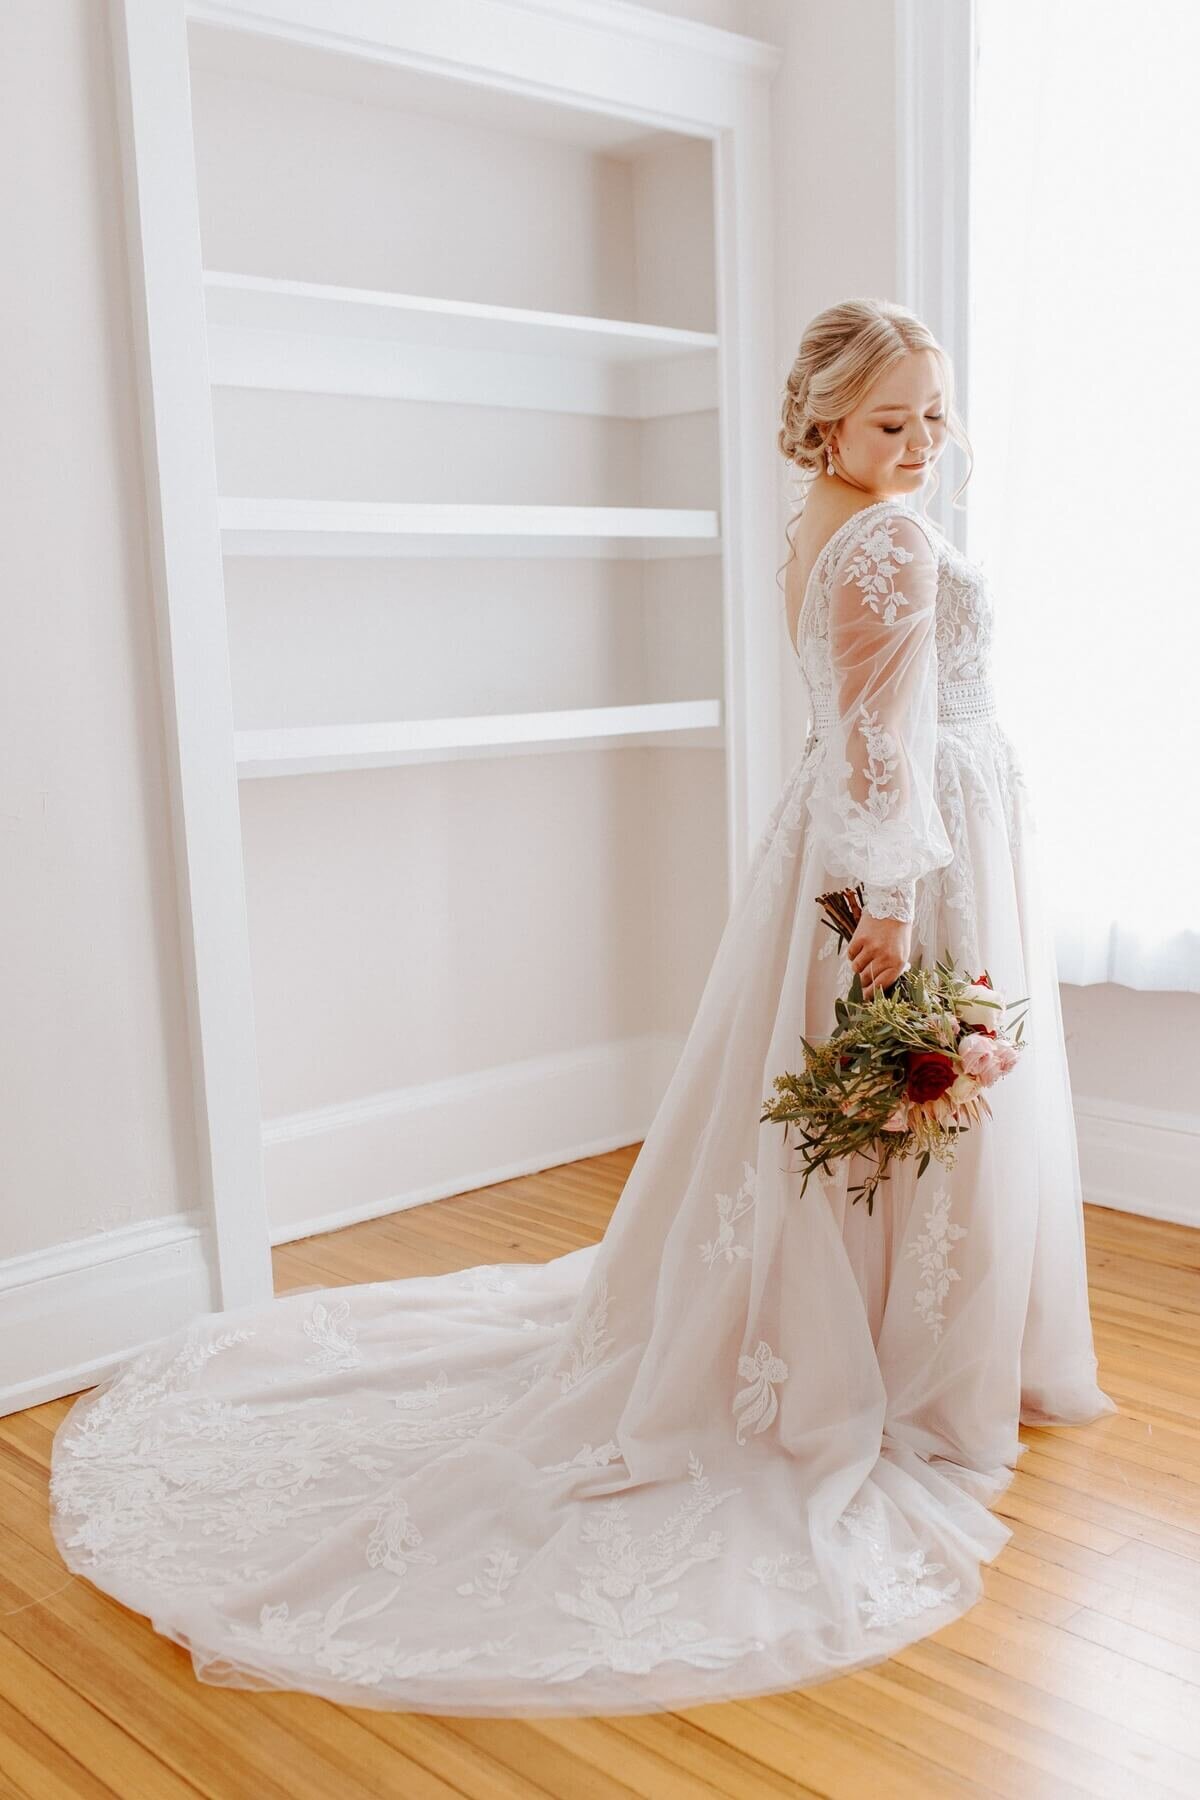 9-kara-loryn-photography-bride-in-wedding-dress